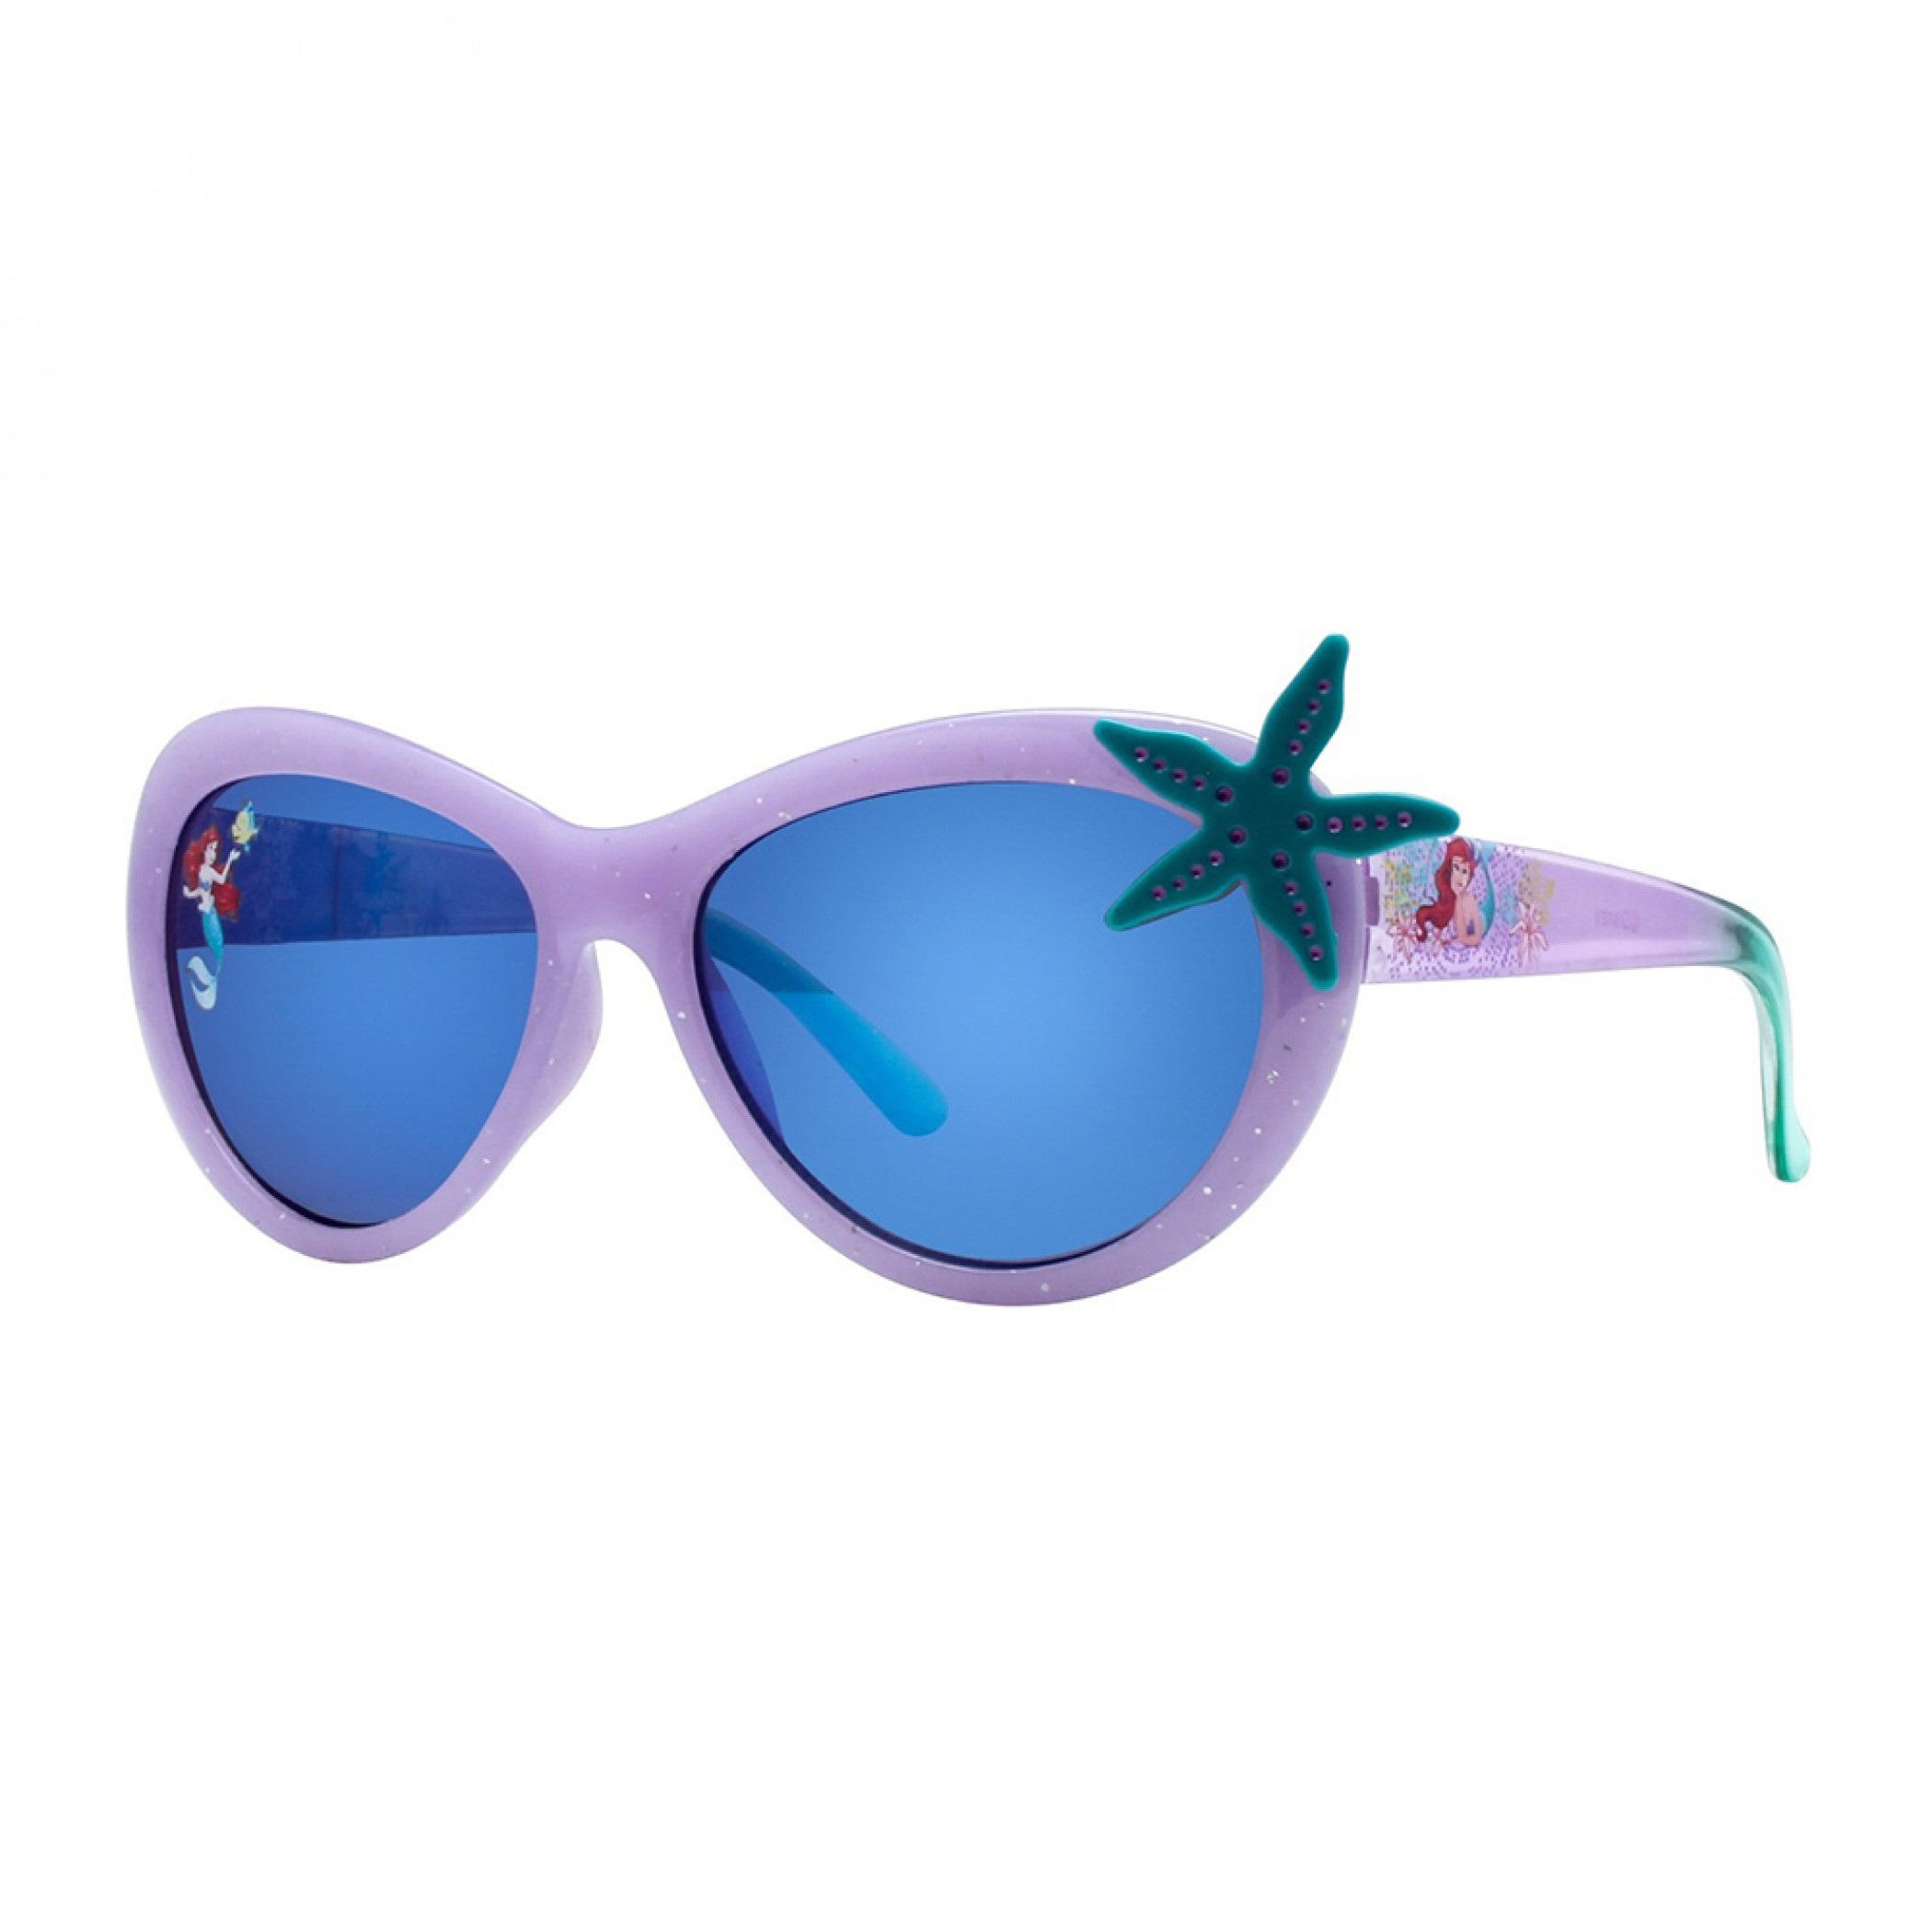 Disney The Little Mermaid Ariel Sunglasses w/ Handle Carrier Pouch